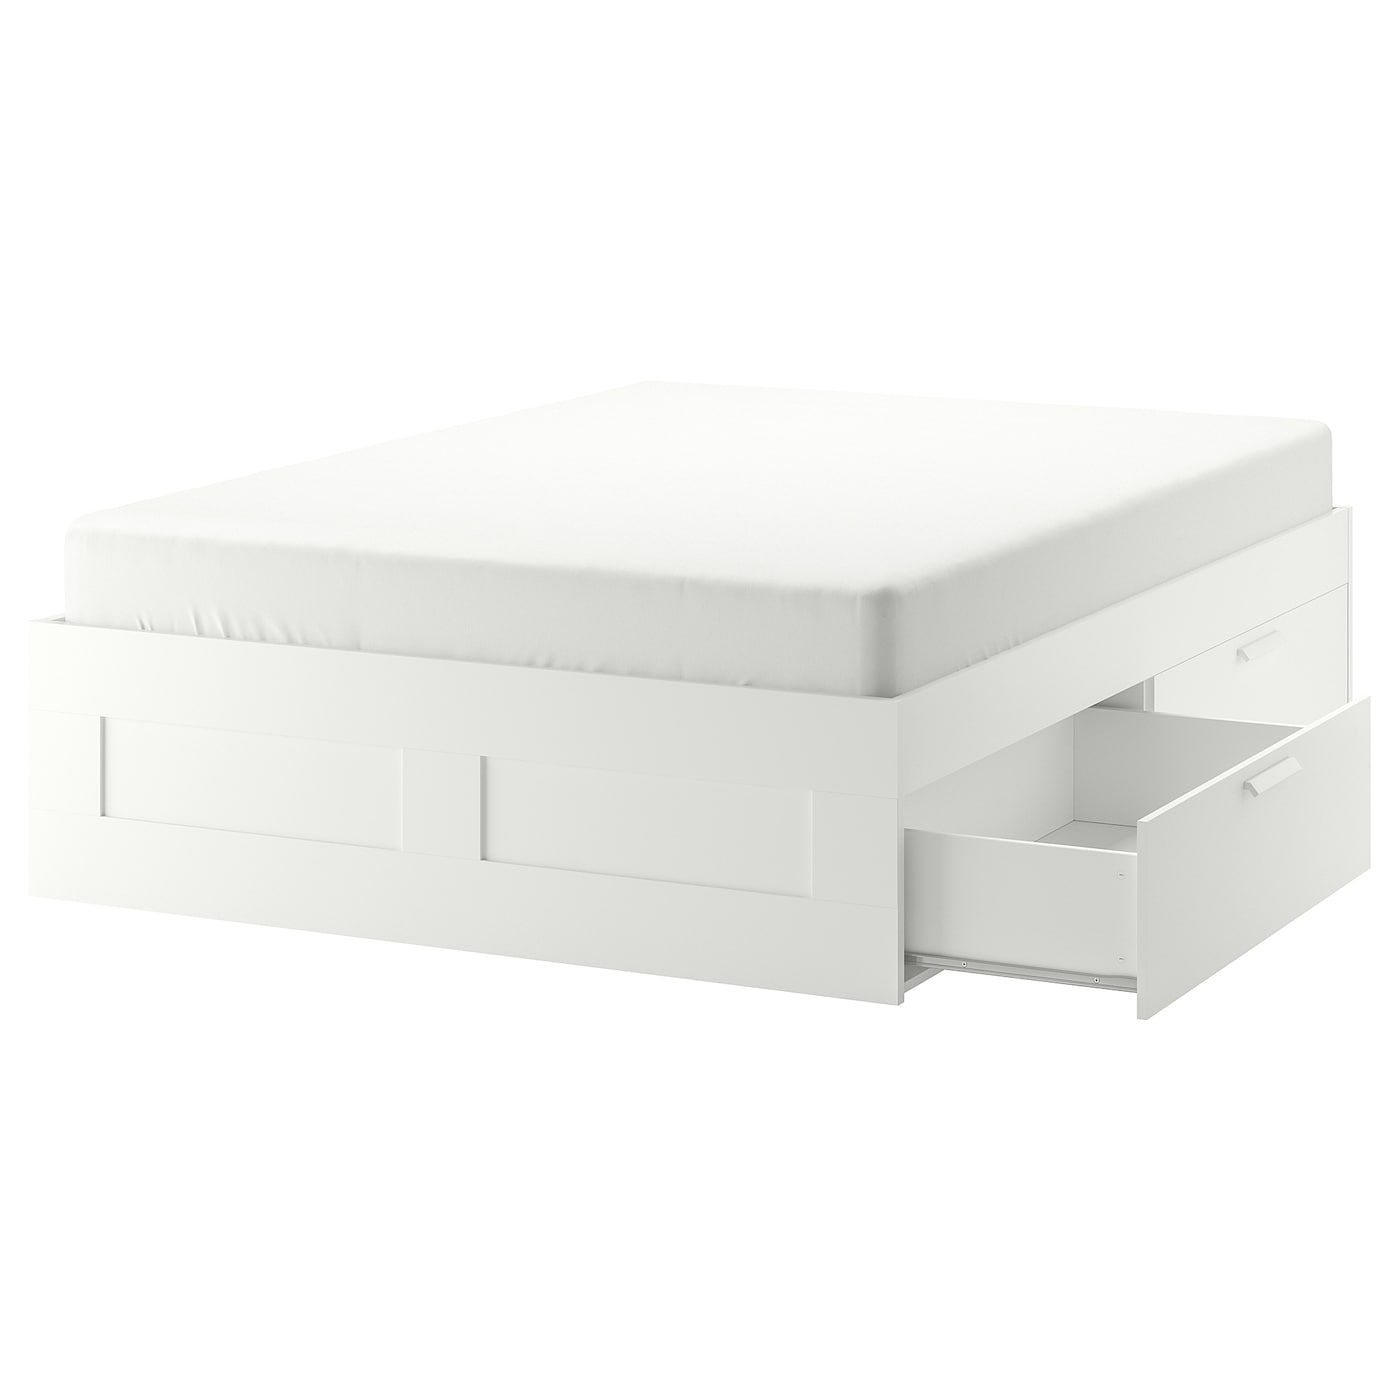 Каркас кровати с ящиками - IKEA BRIMNES, 200х140 см, белый, БРИМНЕС ИКЕА